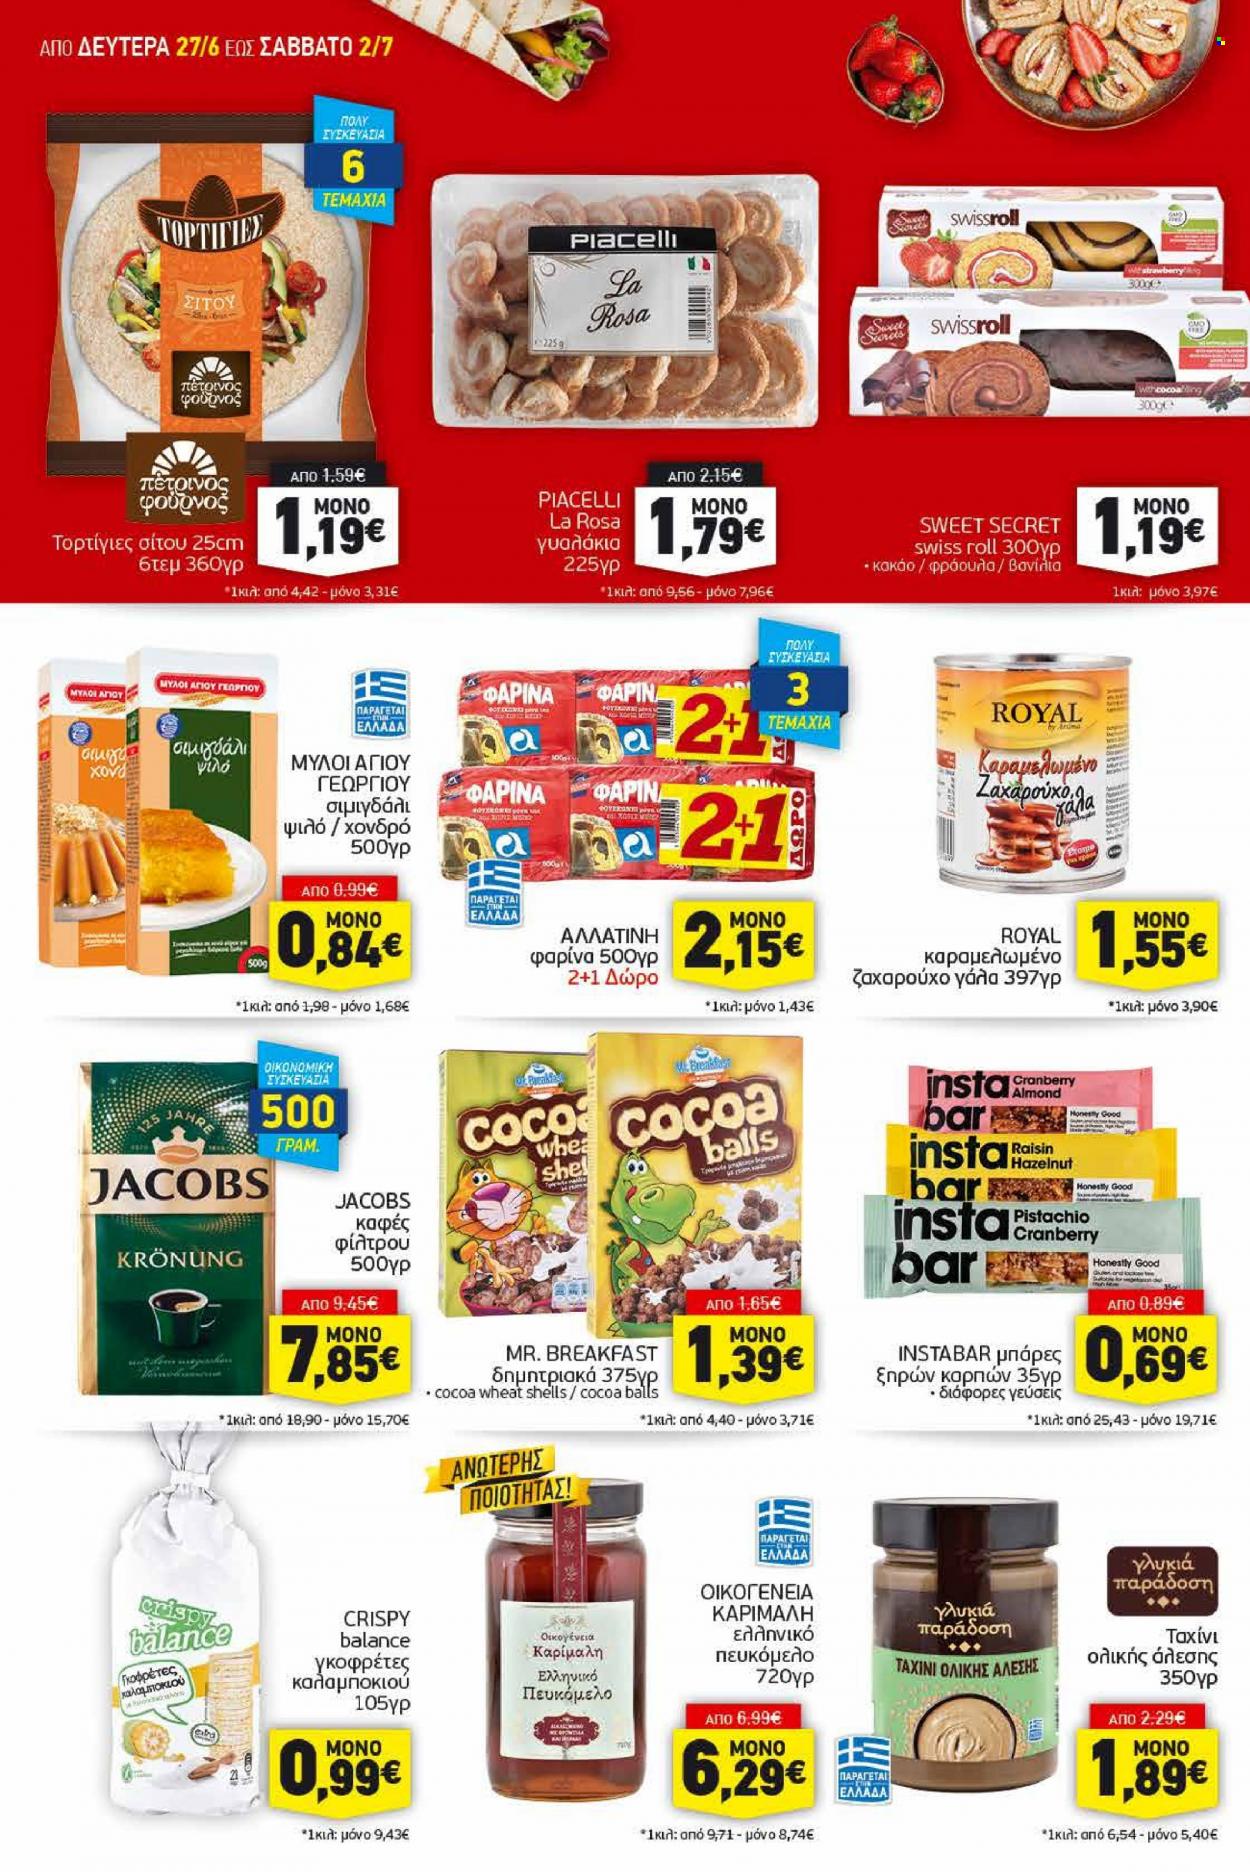 thumbnail - Φυλλάδια Discount Markt - 27.06.2022 - 02.07.2022 - Εκπτωτικά προϊόντα - καλαμπόκι, γάλα, γκοφρέτες, Jacobs, καφές, κρασί. Σελίδα 8.